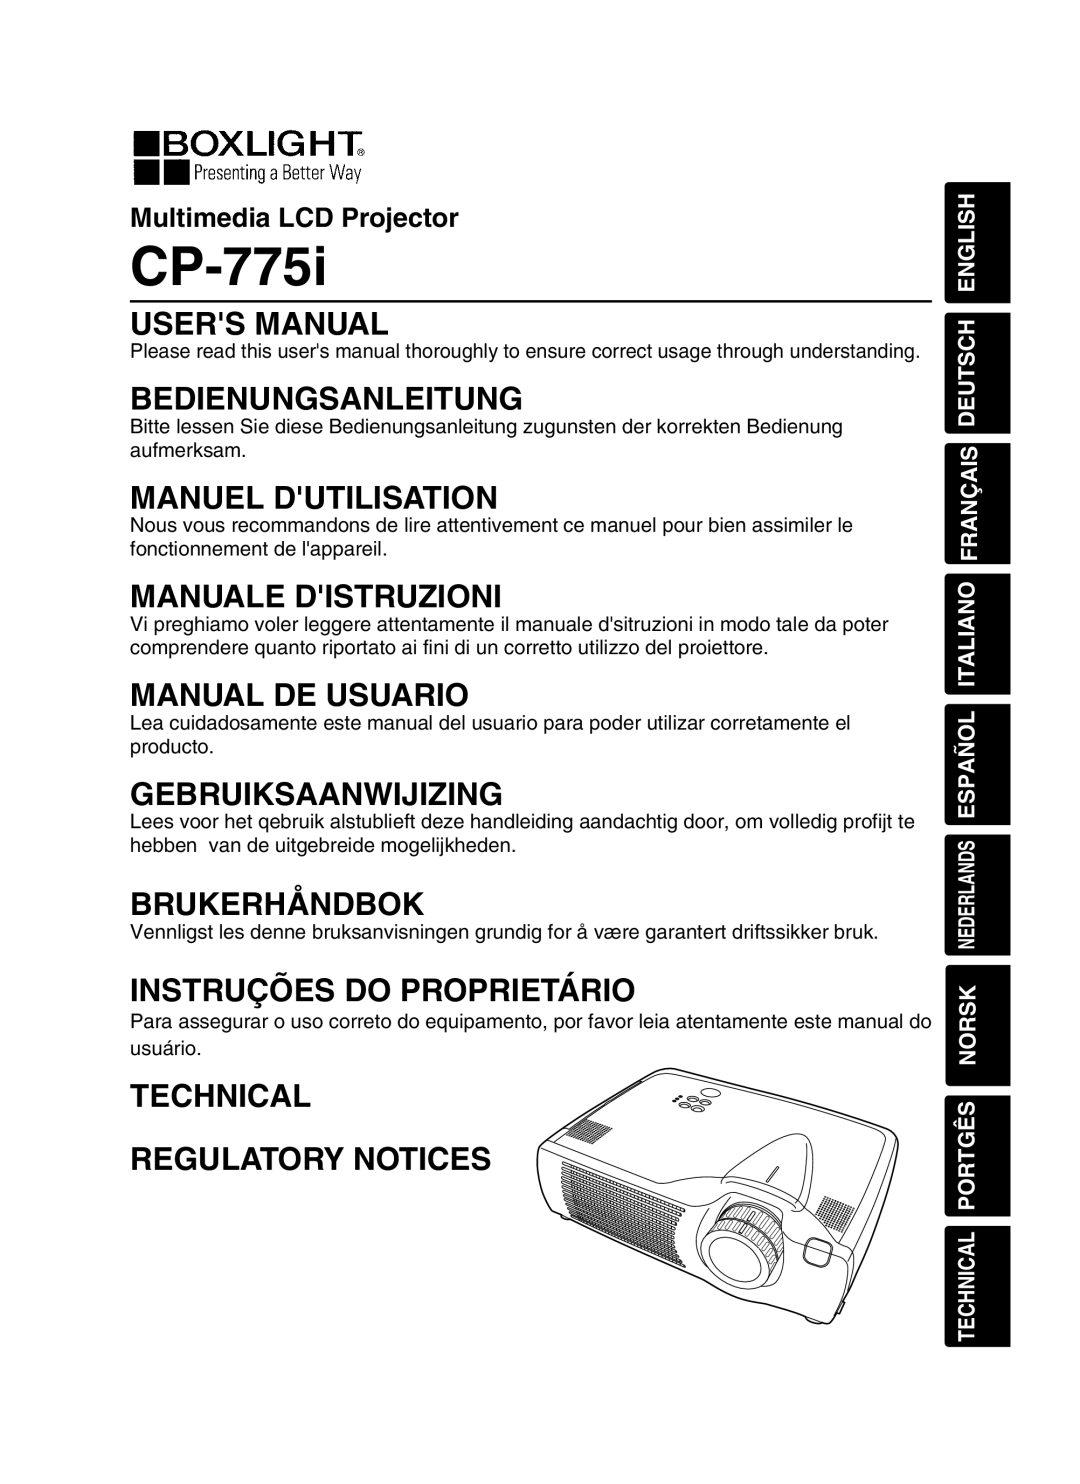 BOXLIGHT CP-775I user manual Users Manual, Bedienungsanleitung, Manuel Dutilisation, Manuale Distruzioni, Brukerhåndbok 